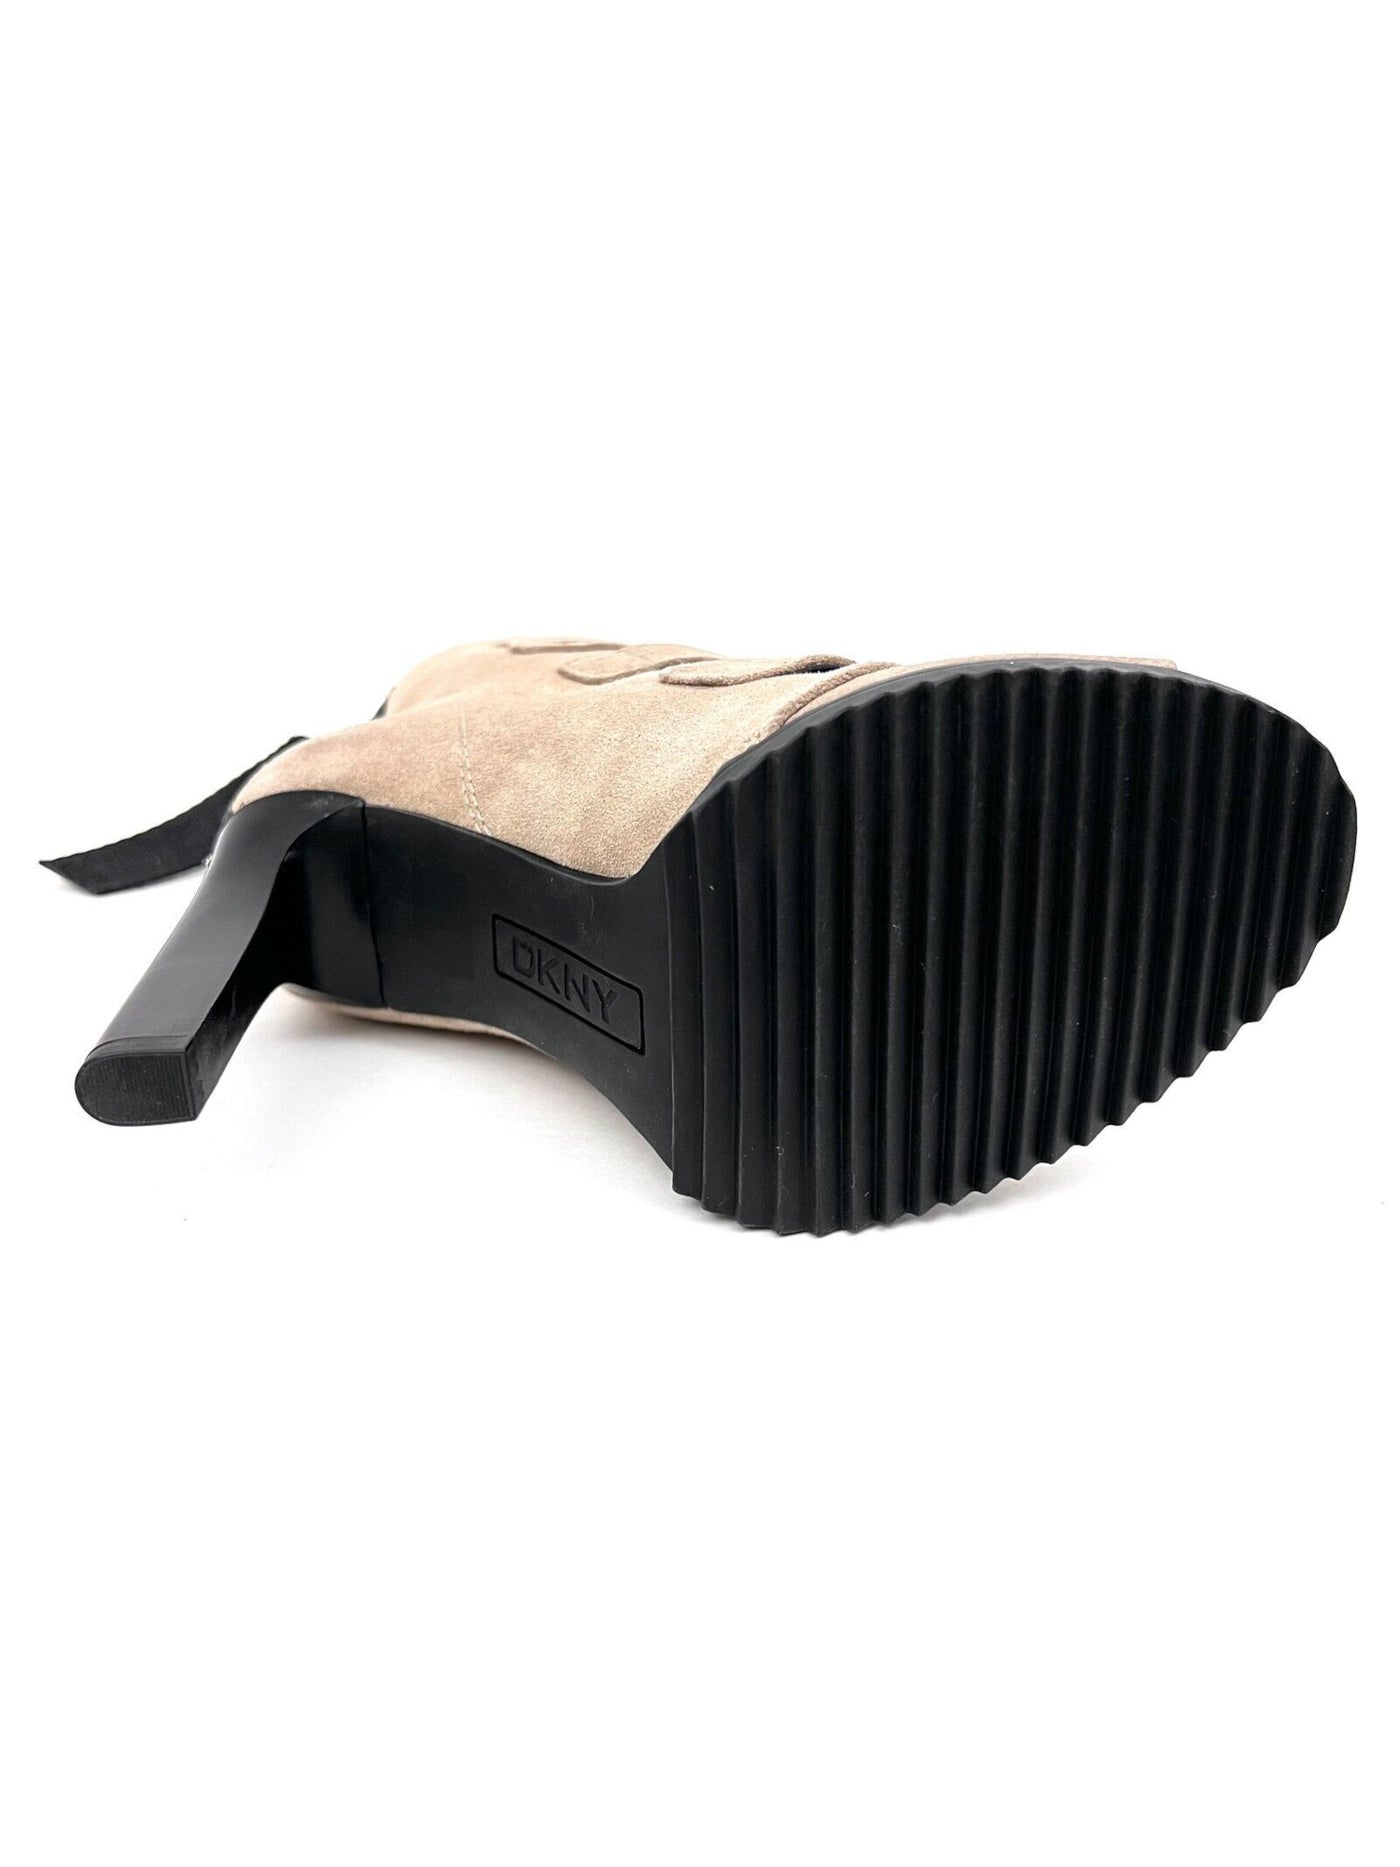 DKNY Womens Beige Hook & Loop Logo Tassle Padded Strappy Blake Peep Toe Stiletto Zip-Up Suede Heeled Boots M